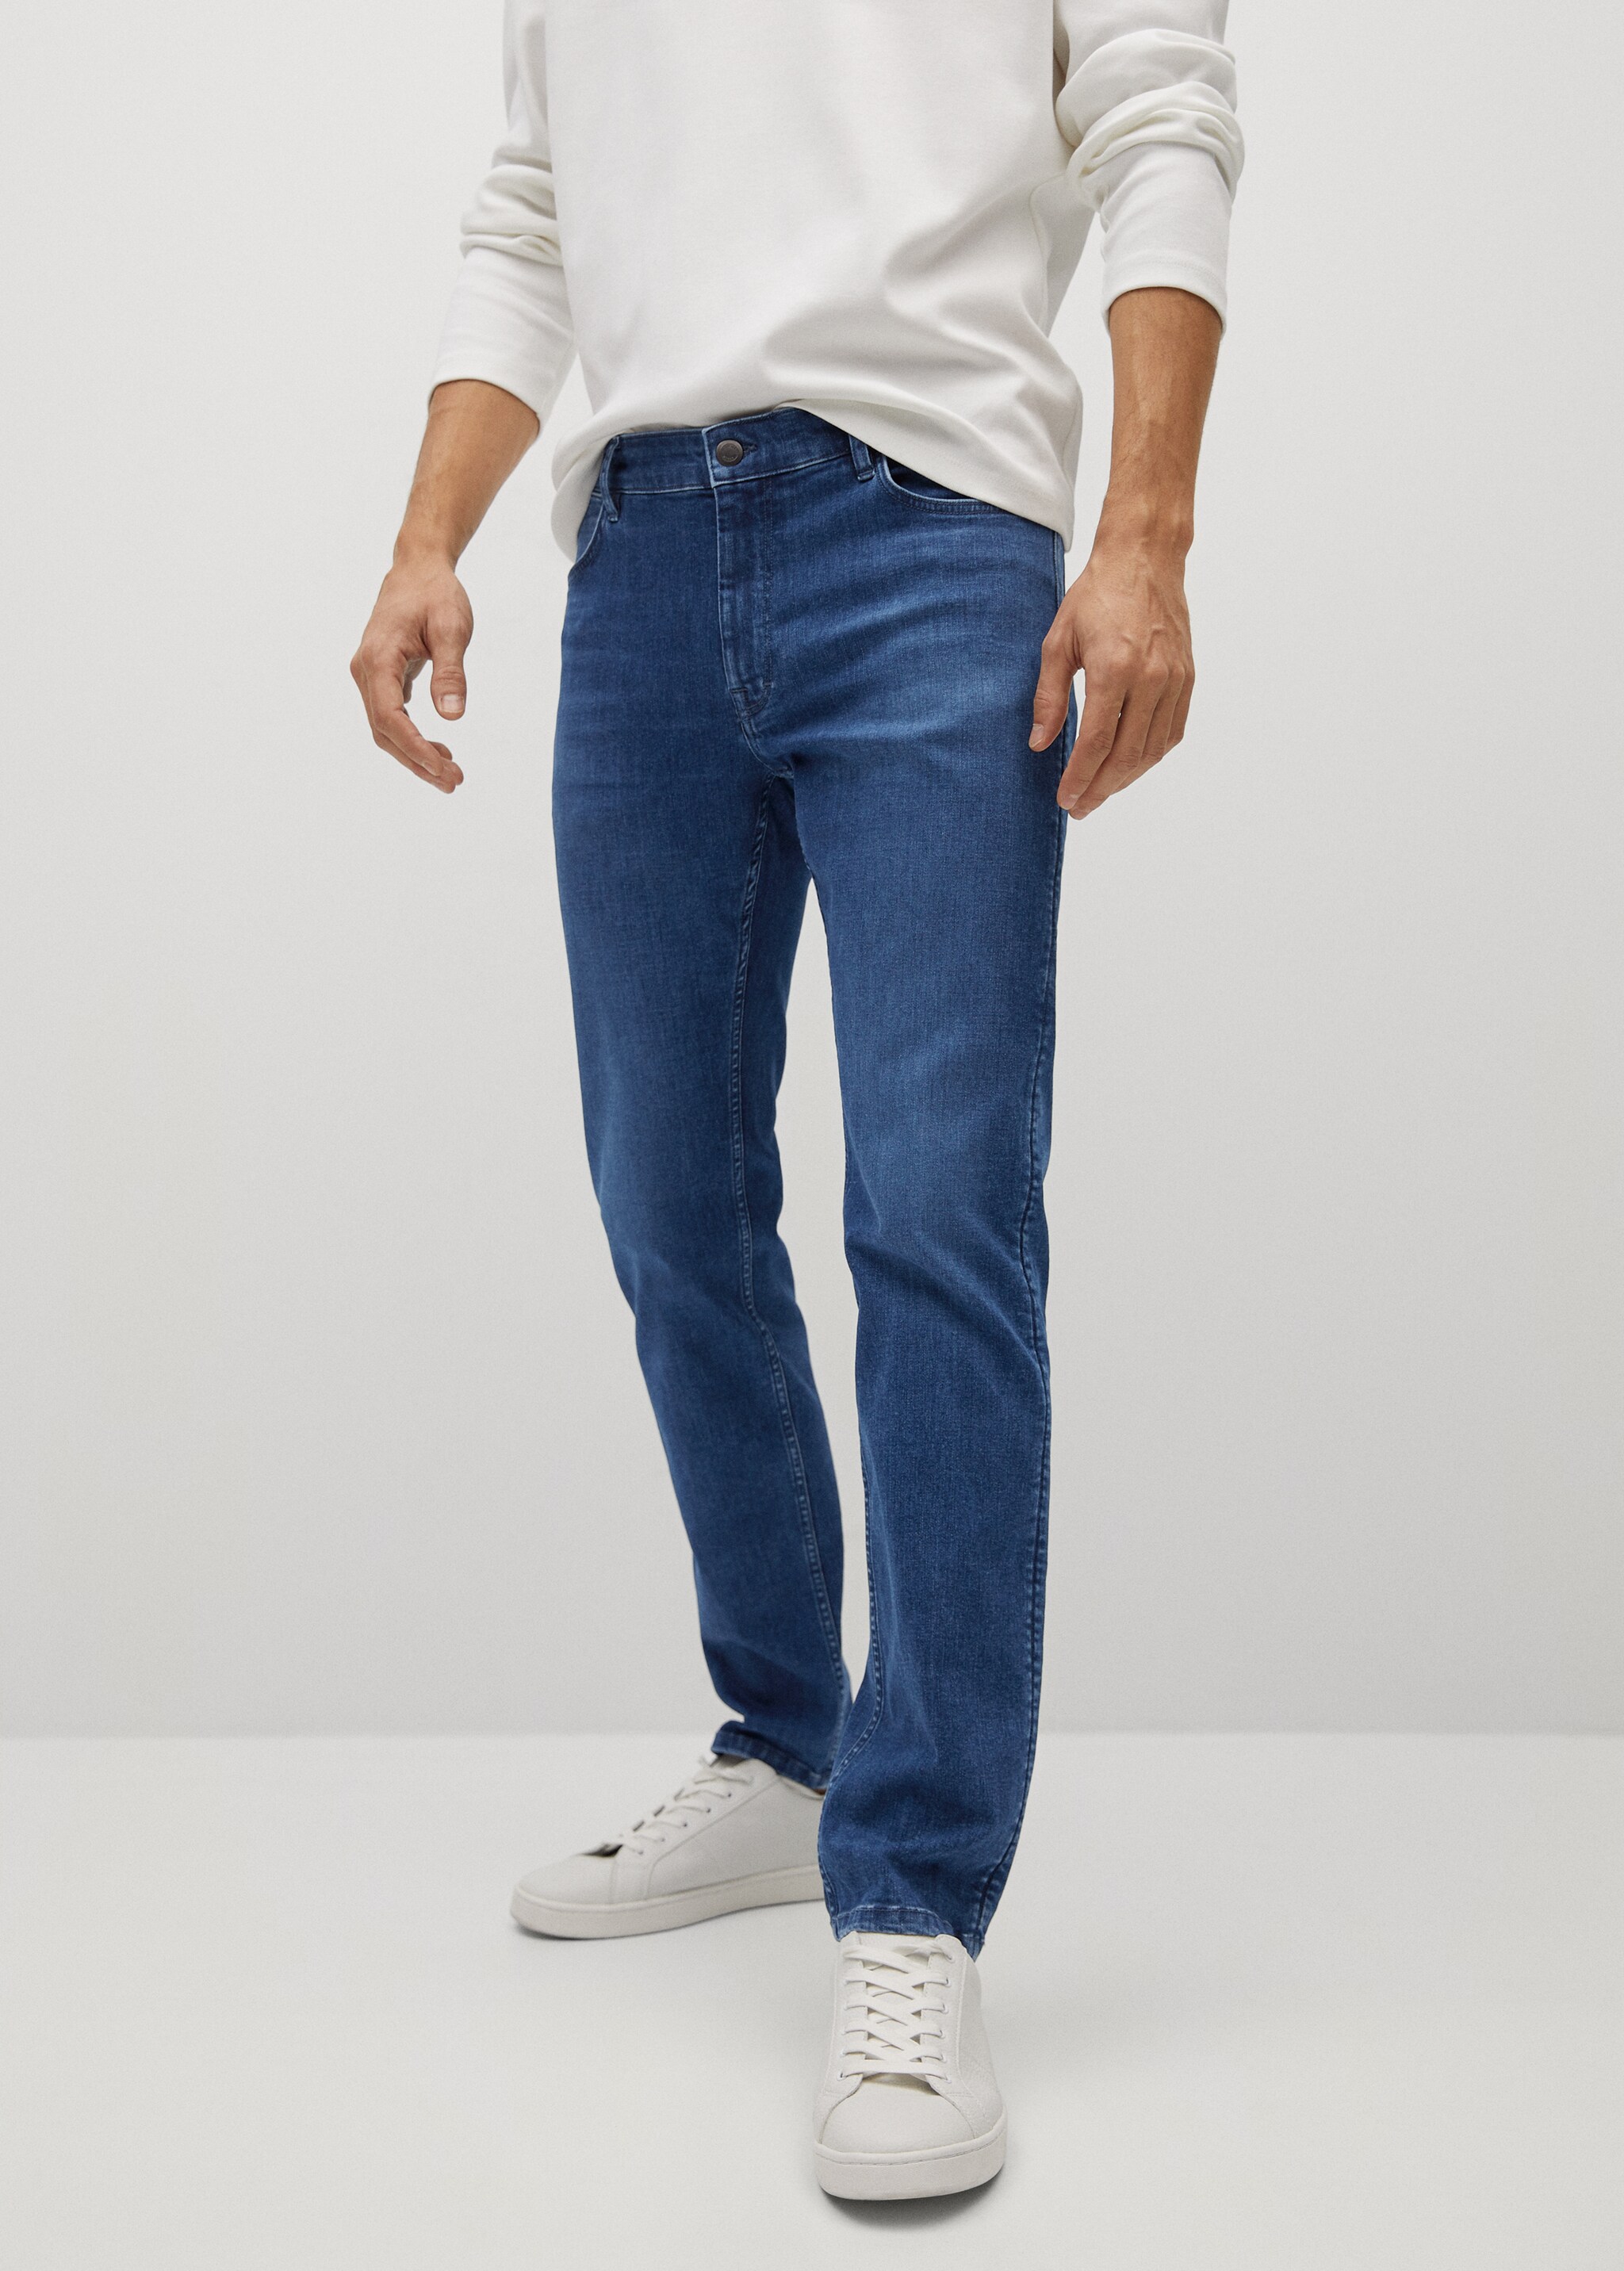 Slim fit Ultra Soft Touch Patrick jeans - Medium plane